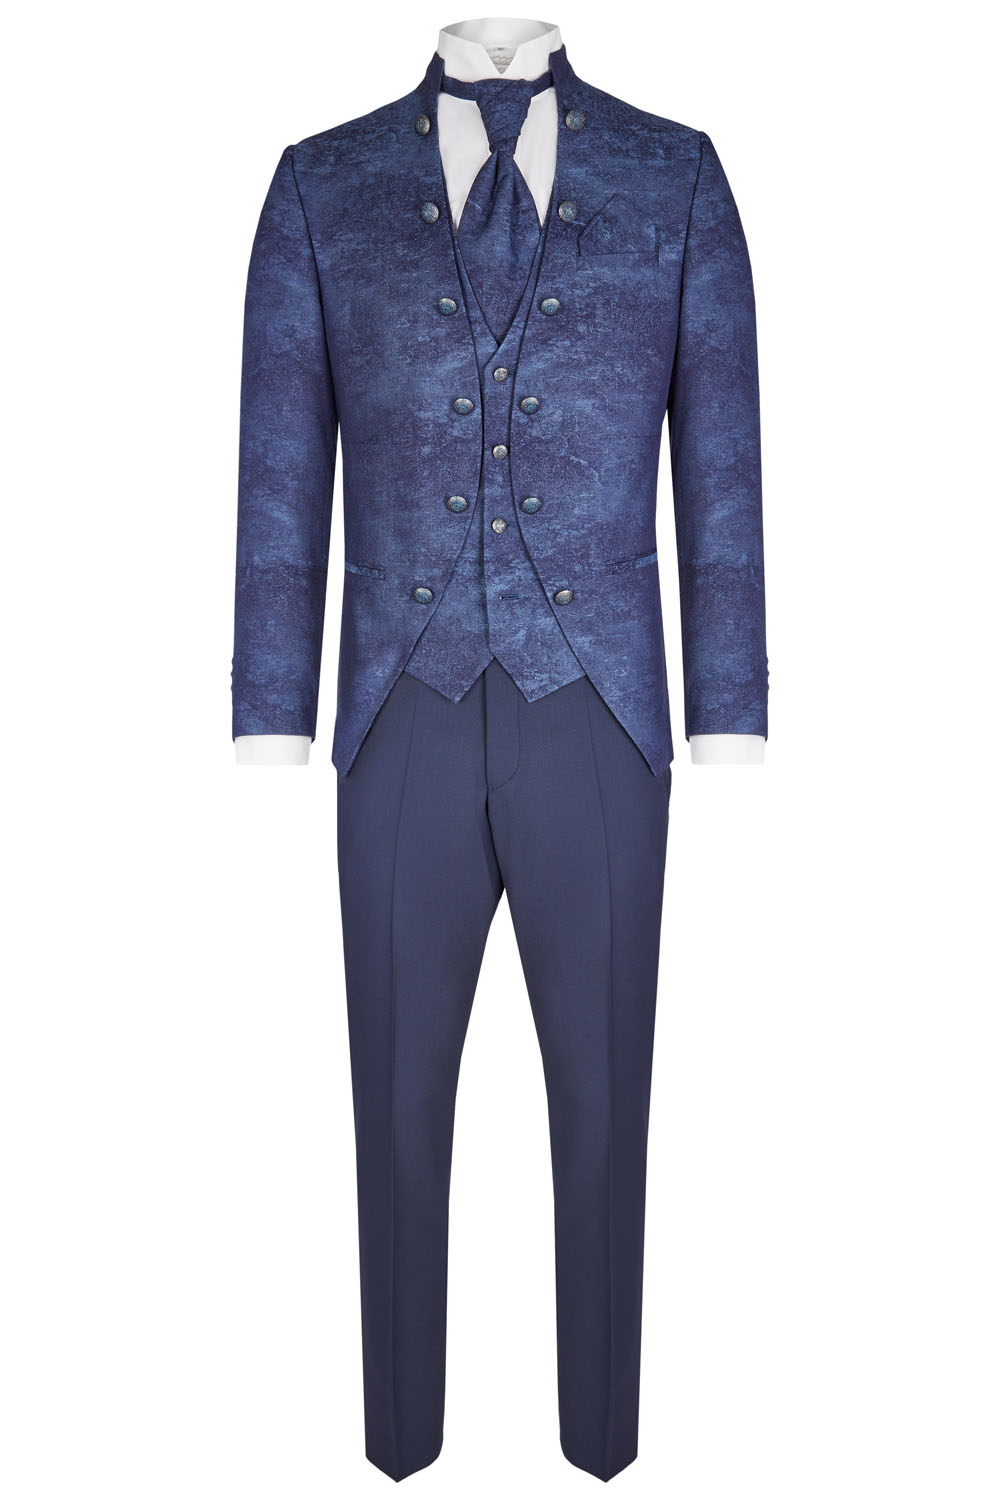 Deep Blue 3 piece Wedding Suit - Tom Murphy's Formal and Menswear